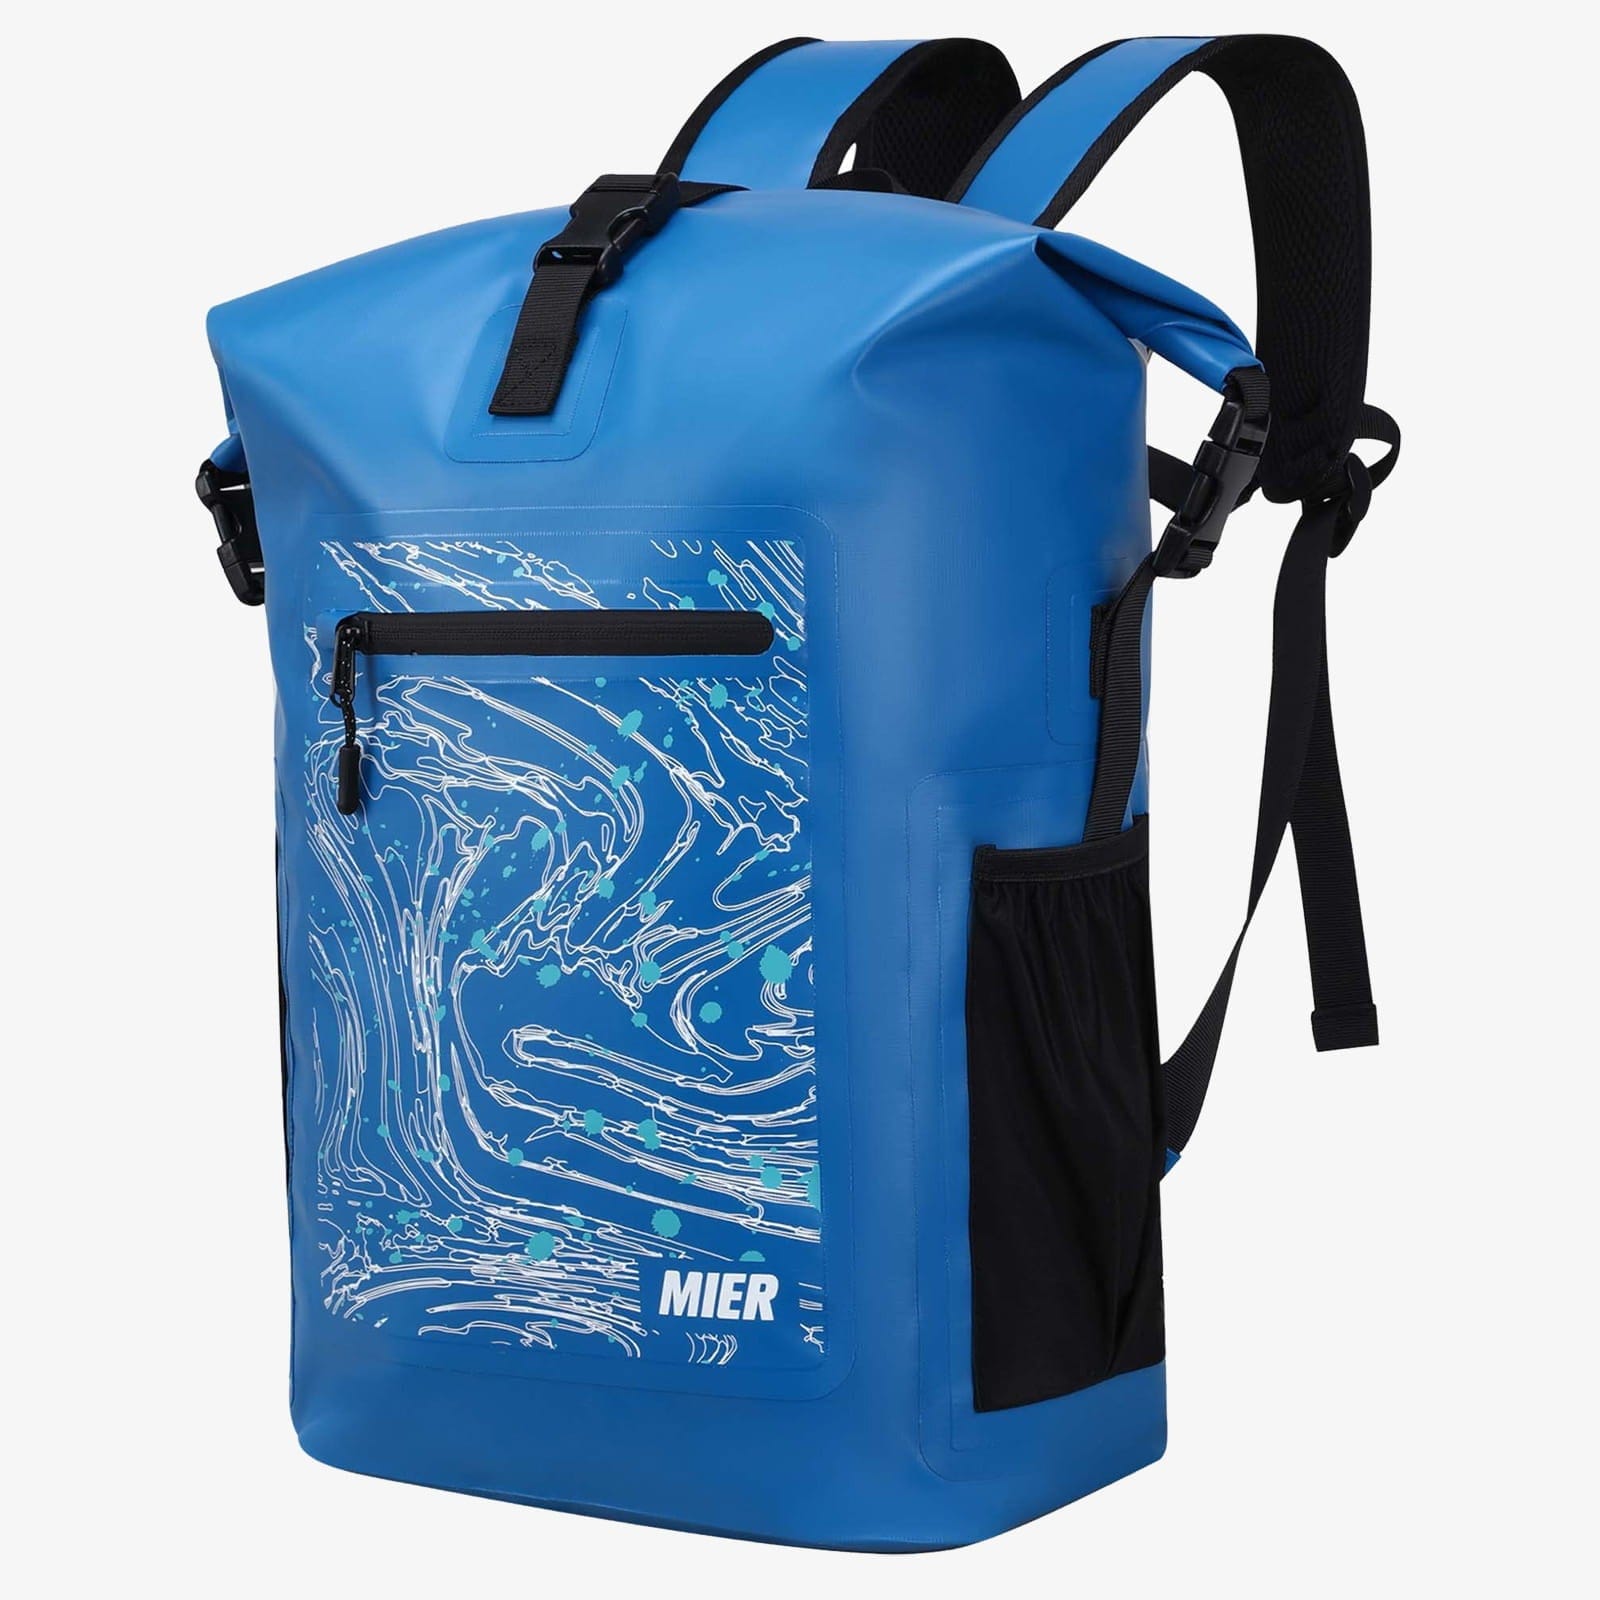 Stansport Waterproof Bag - Blue/Clear, 10 L - Fred Meyer